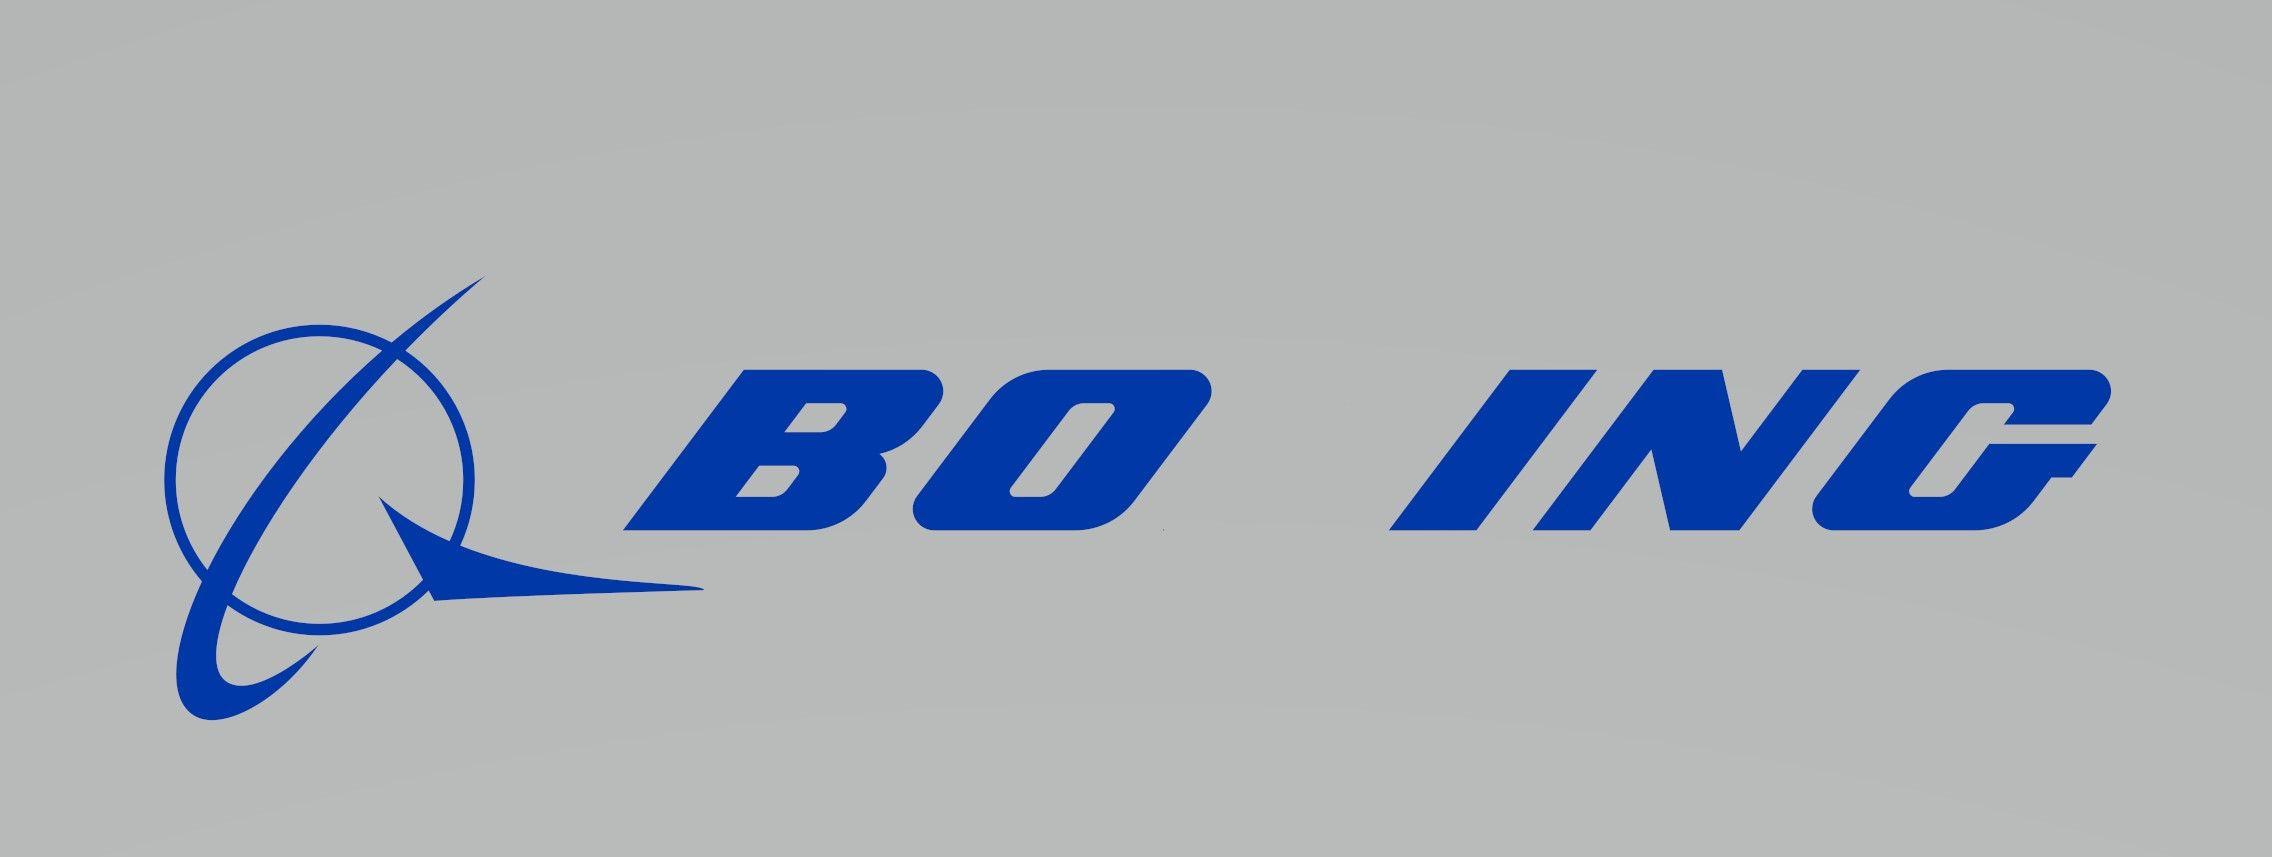 Boeing's Logo - Rare discovery of Boeing's new Logo! : dankmemes